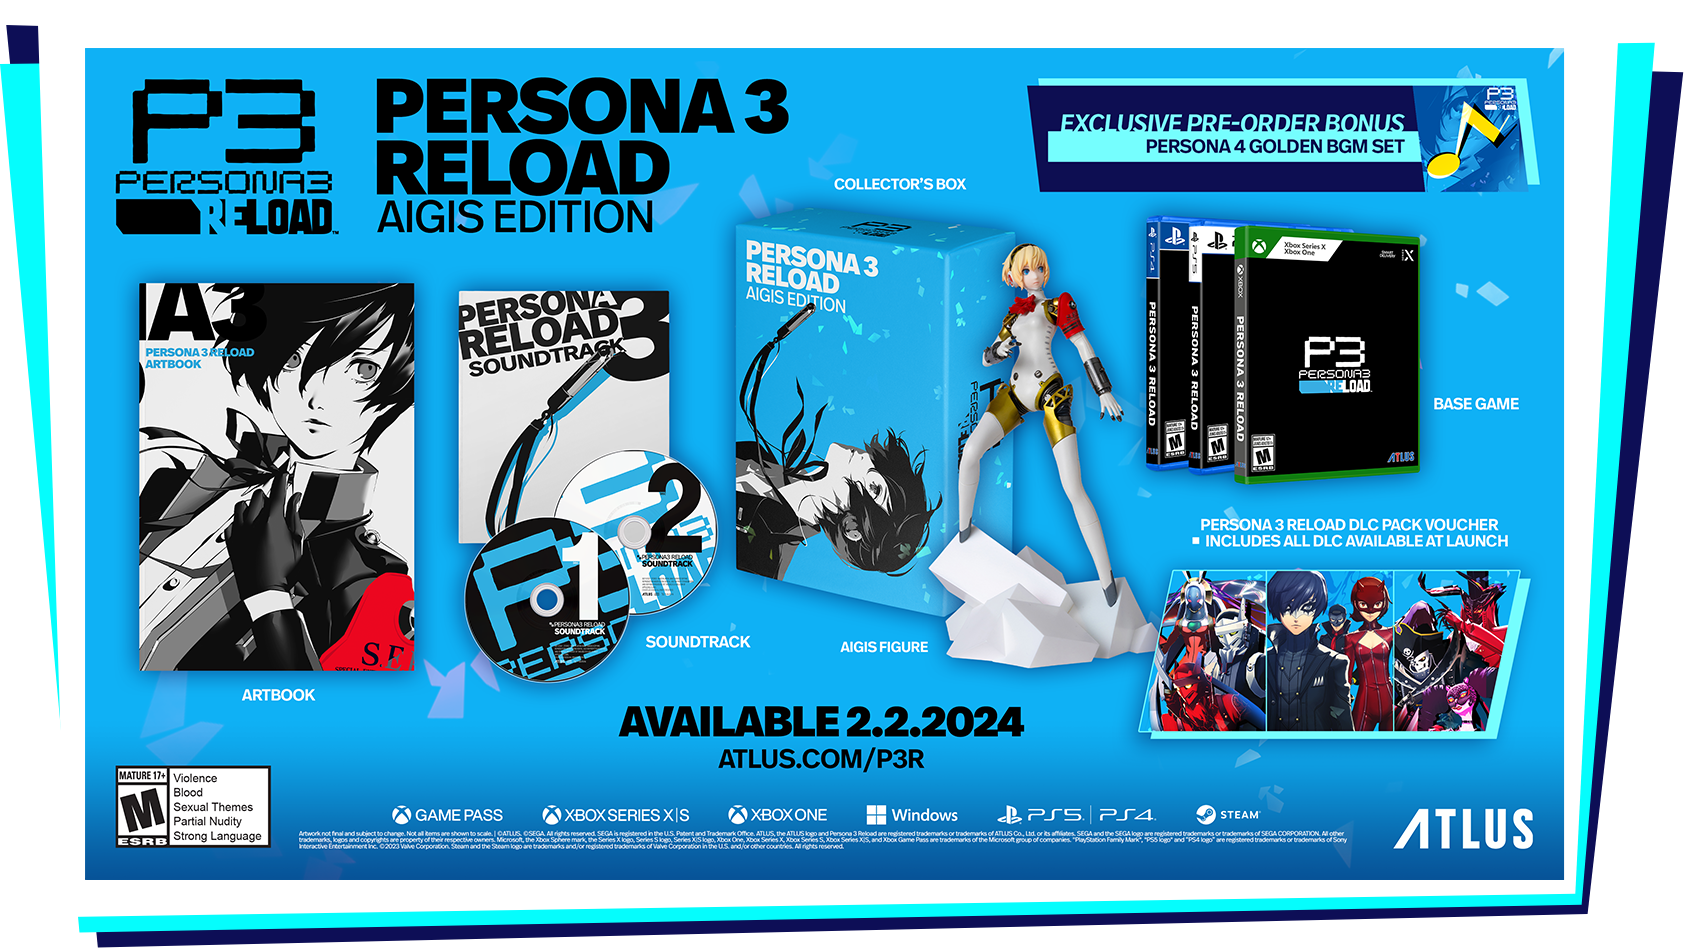 Persona 3 Reload Айгис. Persona 3 Reload ps4 диск. Persona 3 Reload артбук. Persona 3 reload aigis